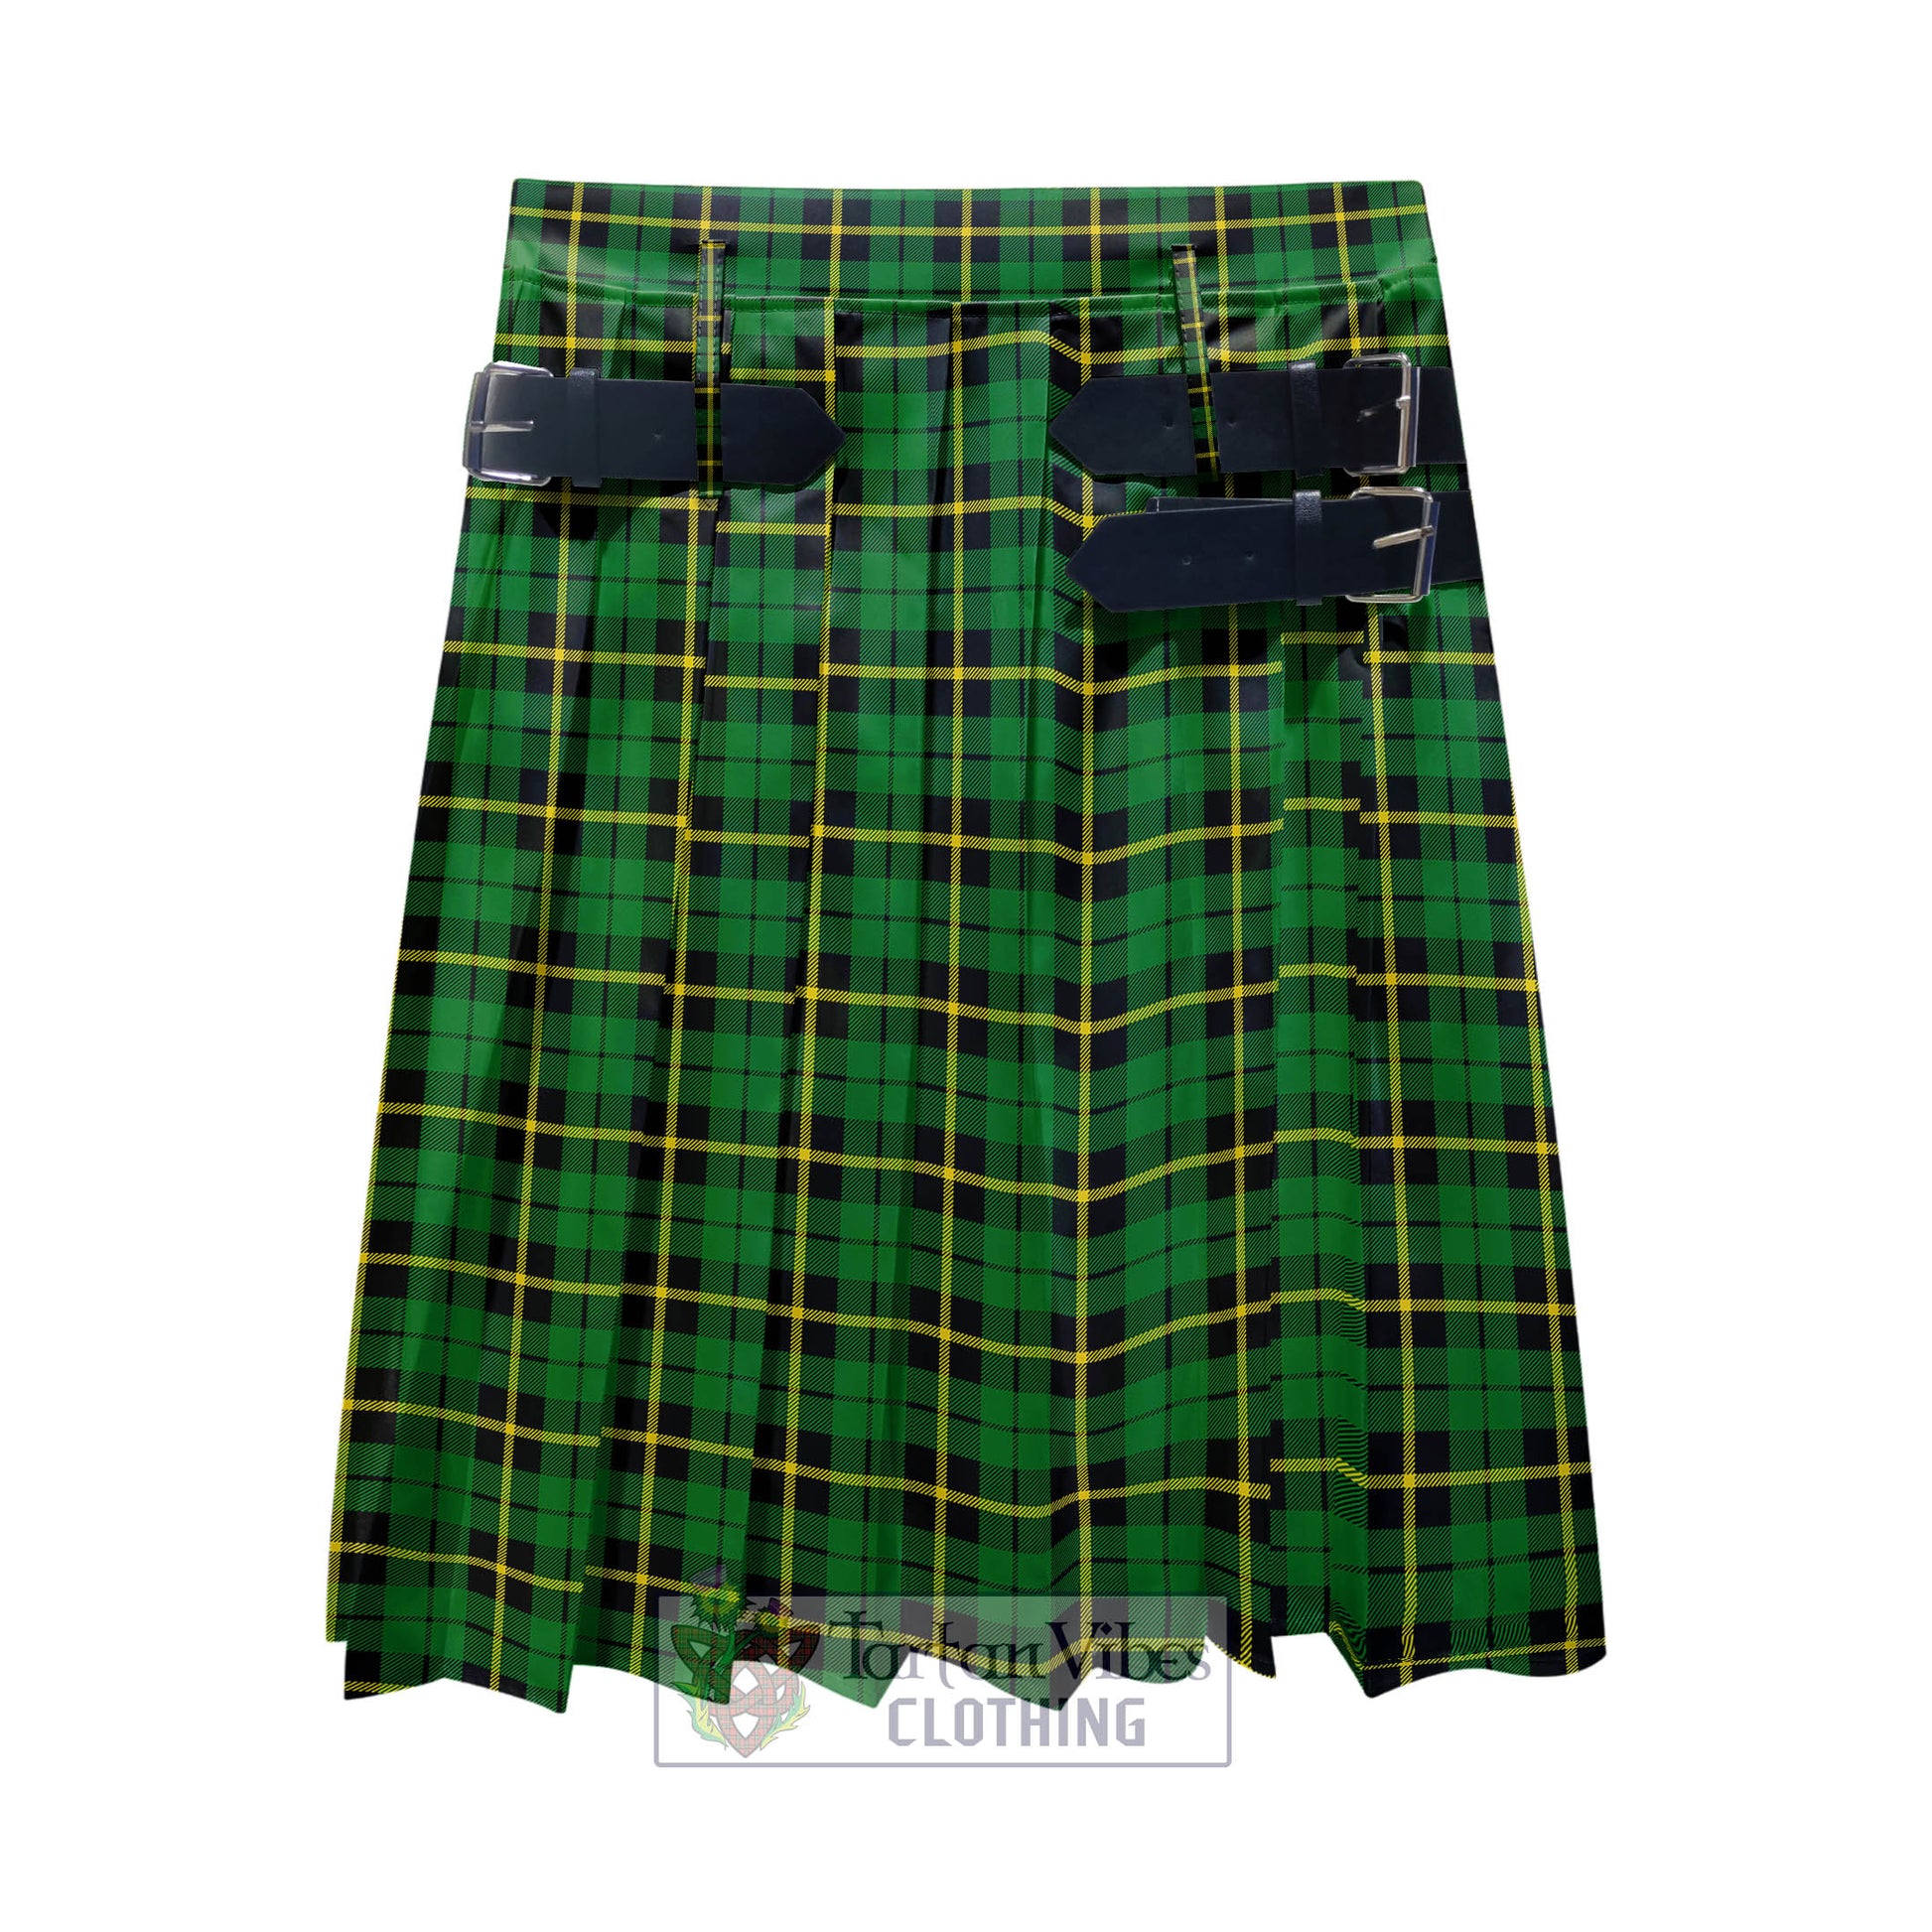 Tartan Vibes Clothing Wallace Hunting Green Tartan Men's Pleated Skirt - Fashion Casual Retro Scottish Style